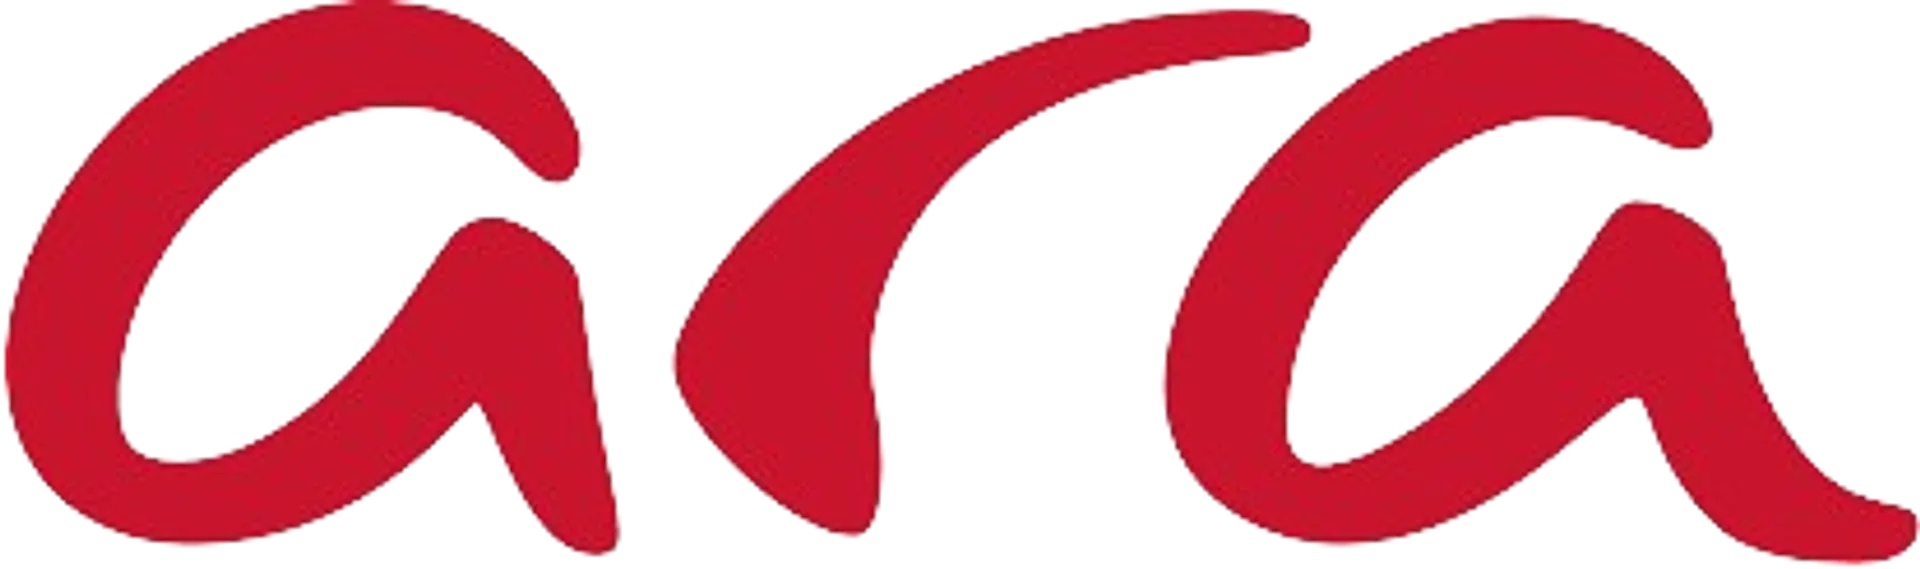 ARA SCHUHE logo die aktuell Flugblatt